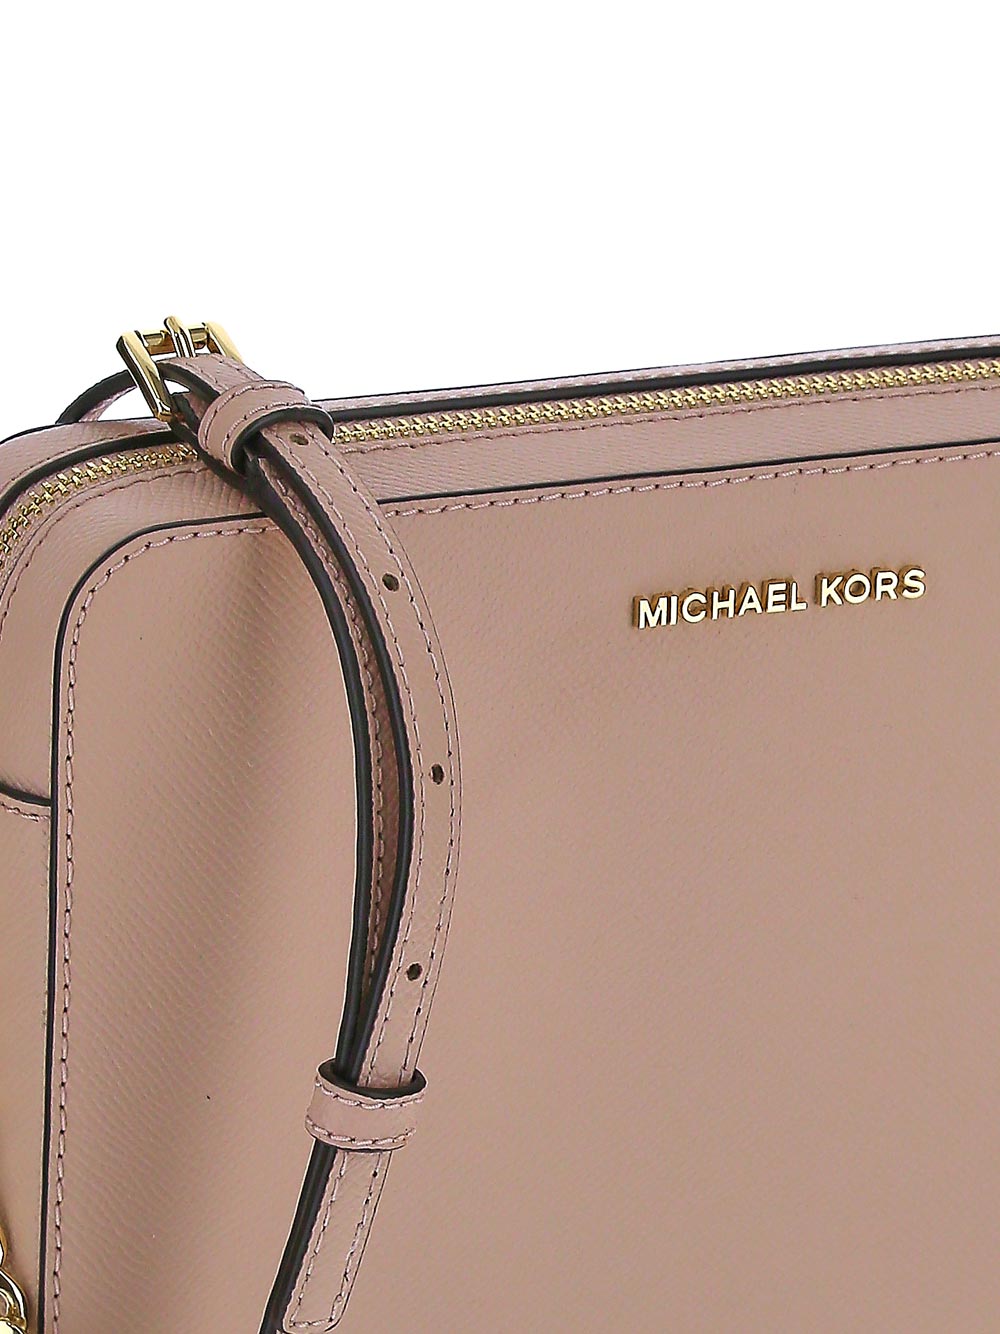 Michael Kors Jet Set Large Saffiano Leather Crossbody Bag